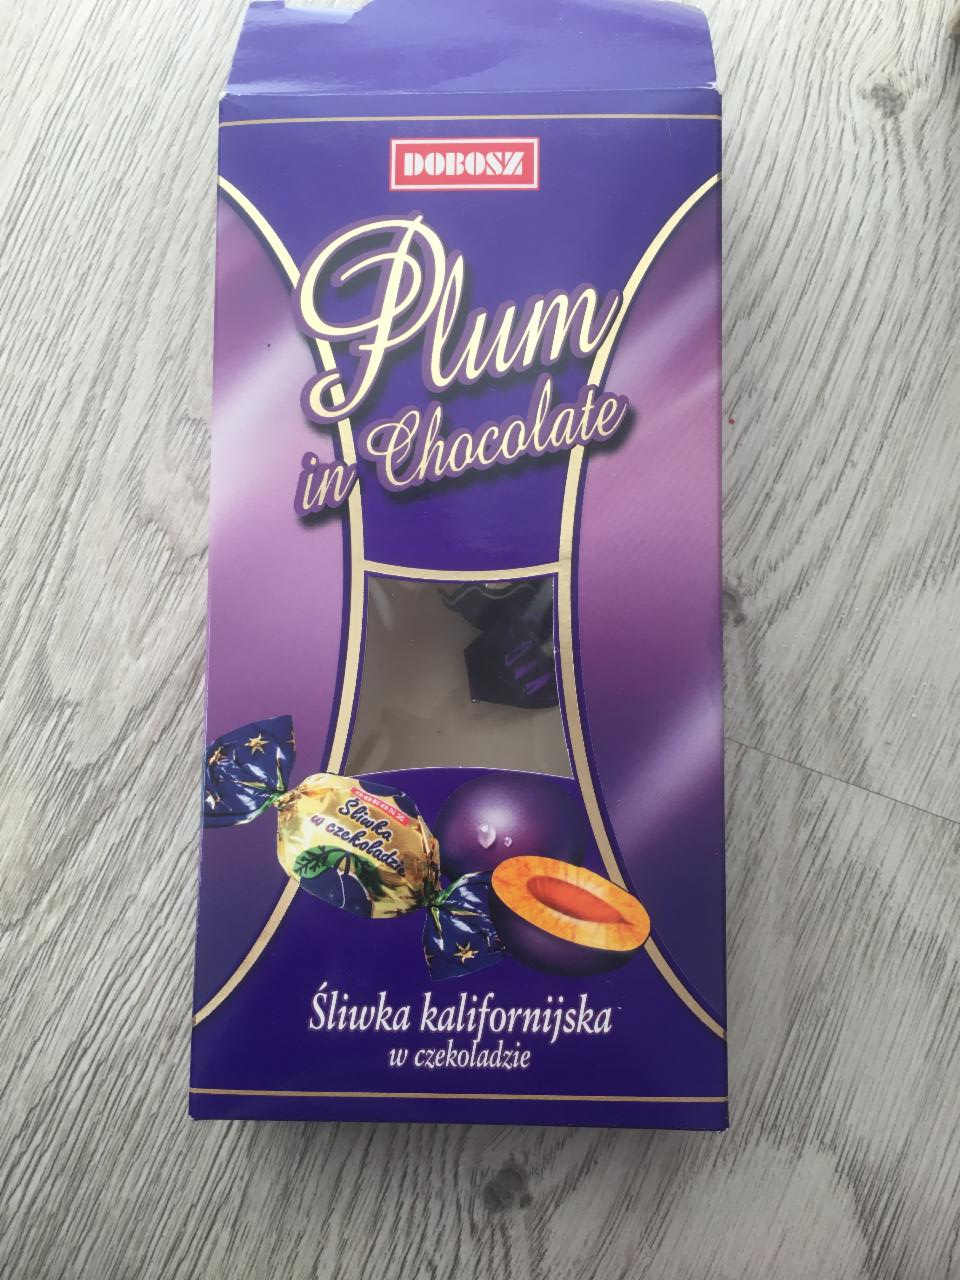 Fotografie - Dobosz Plum in chocolate